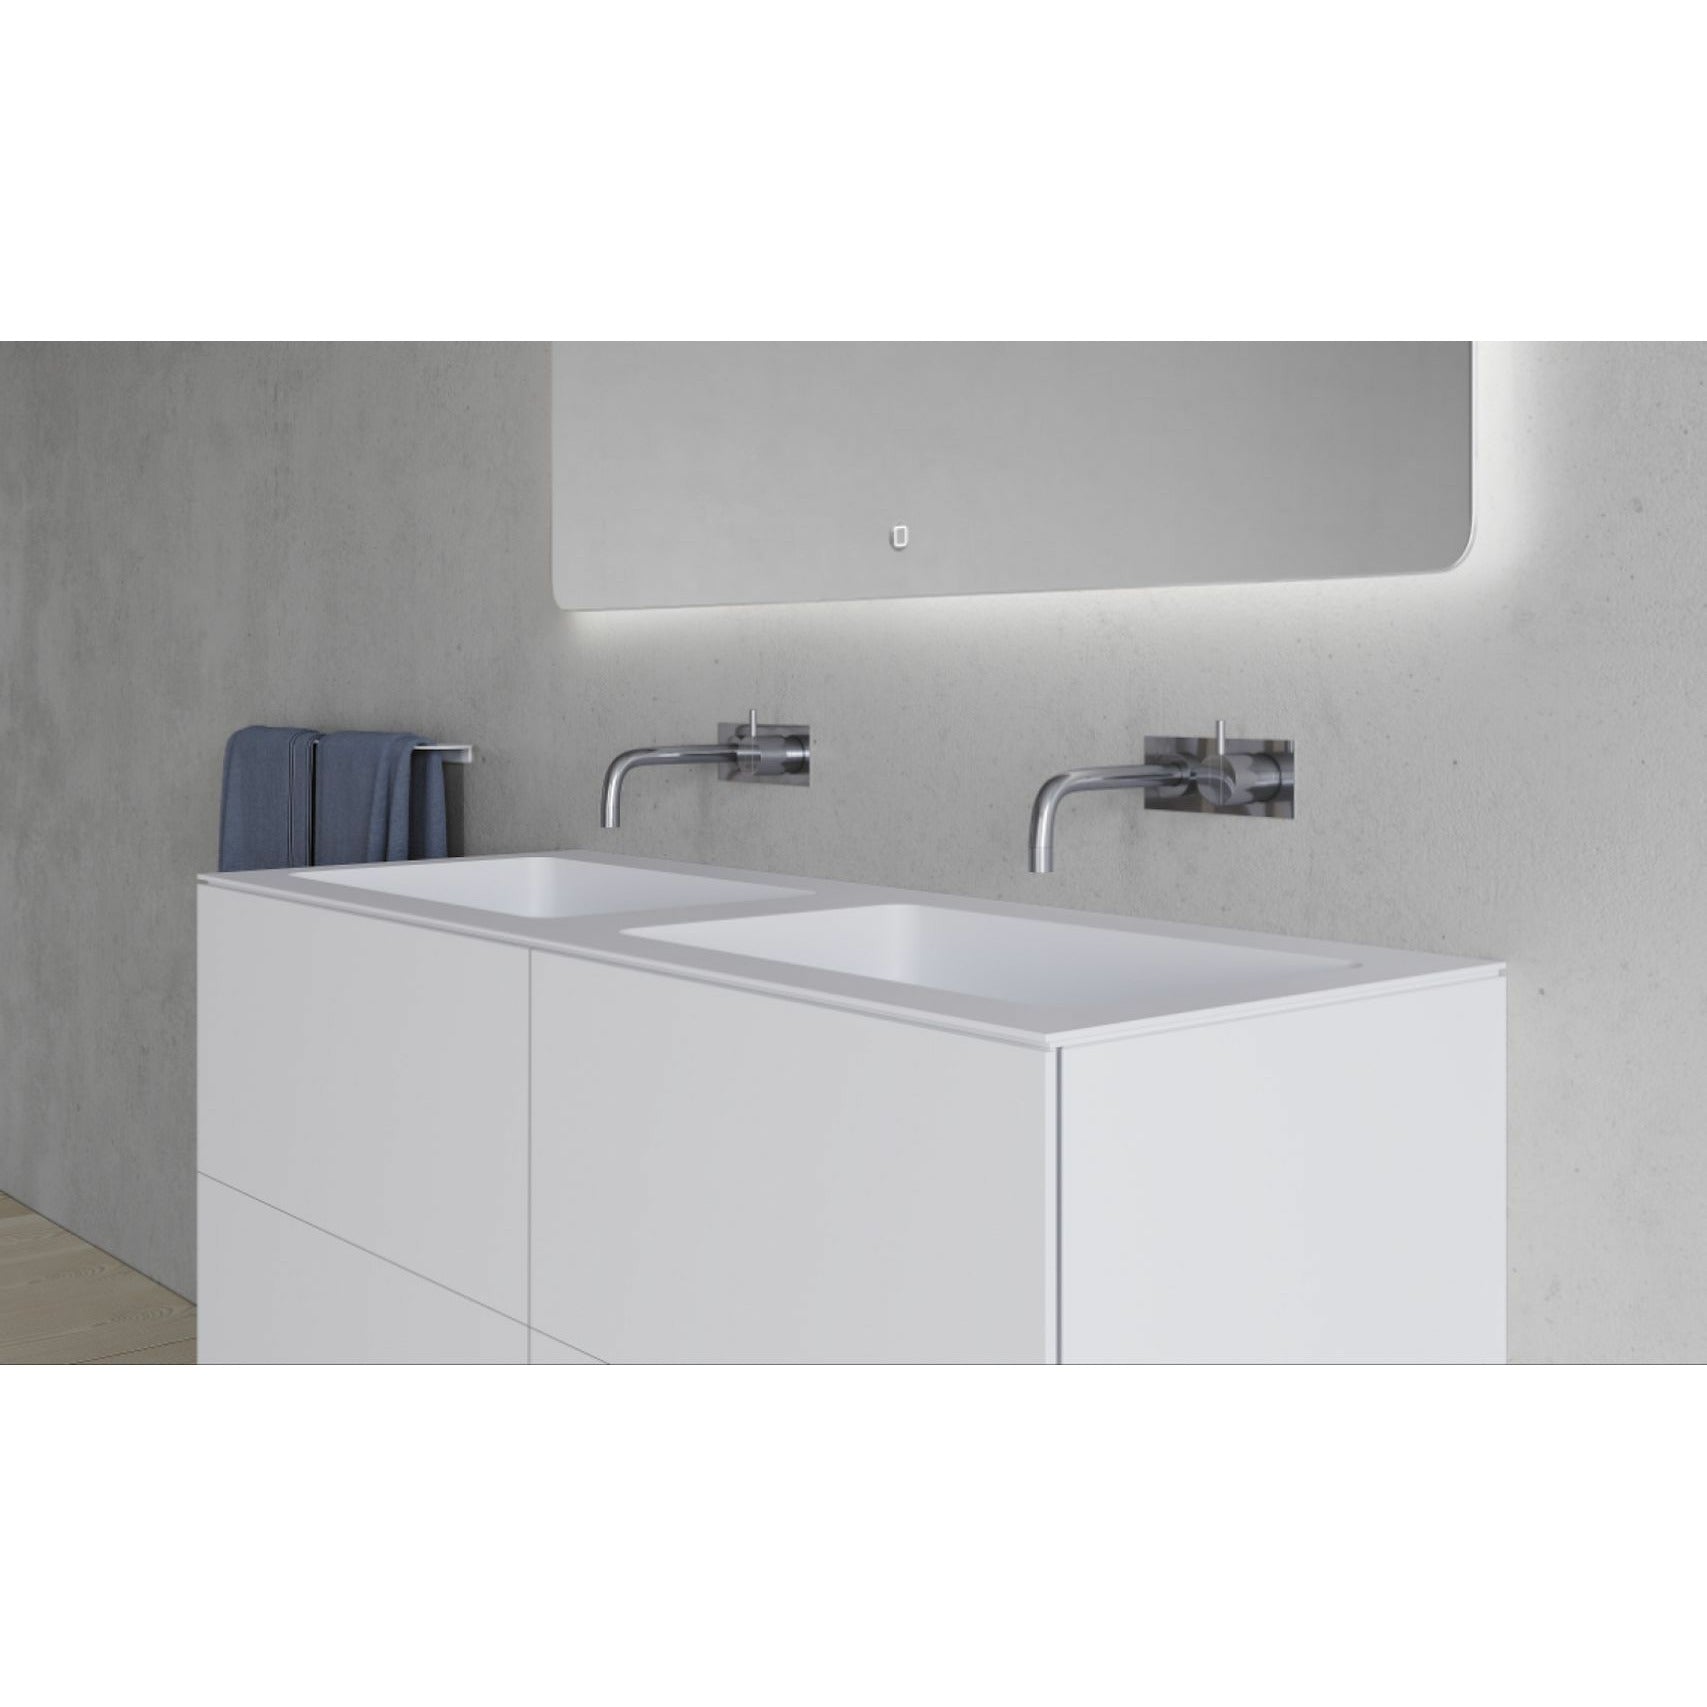 Copenhagen Bath Sq2 Double Cabinet With Double Washing, L120 Cm